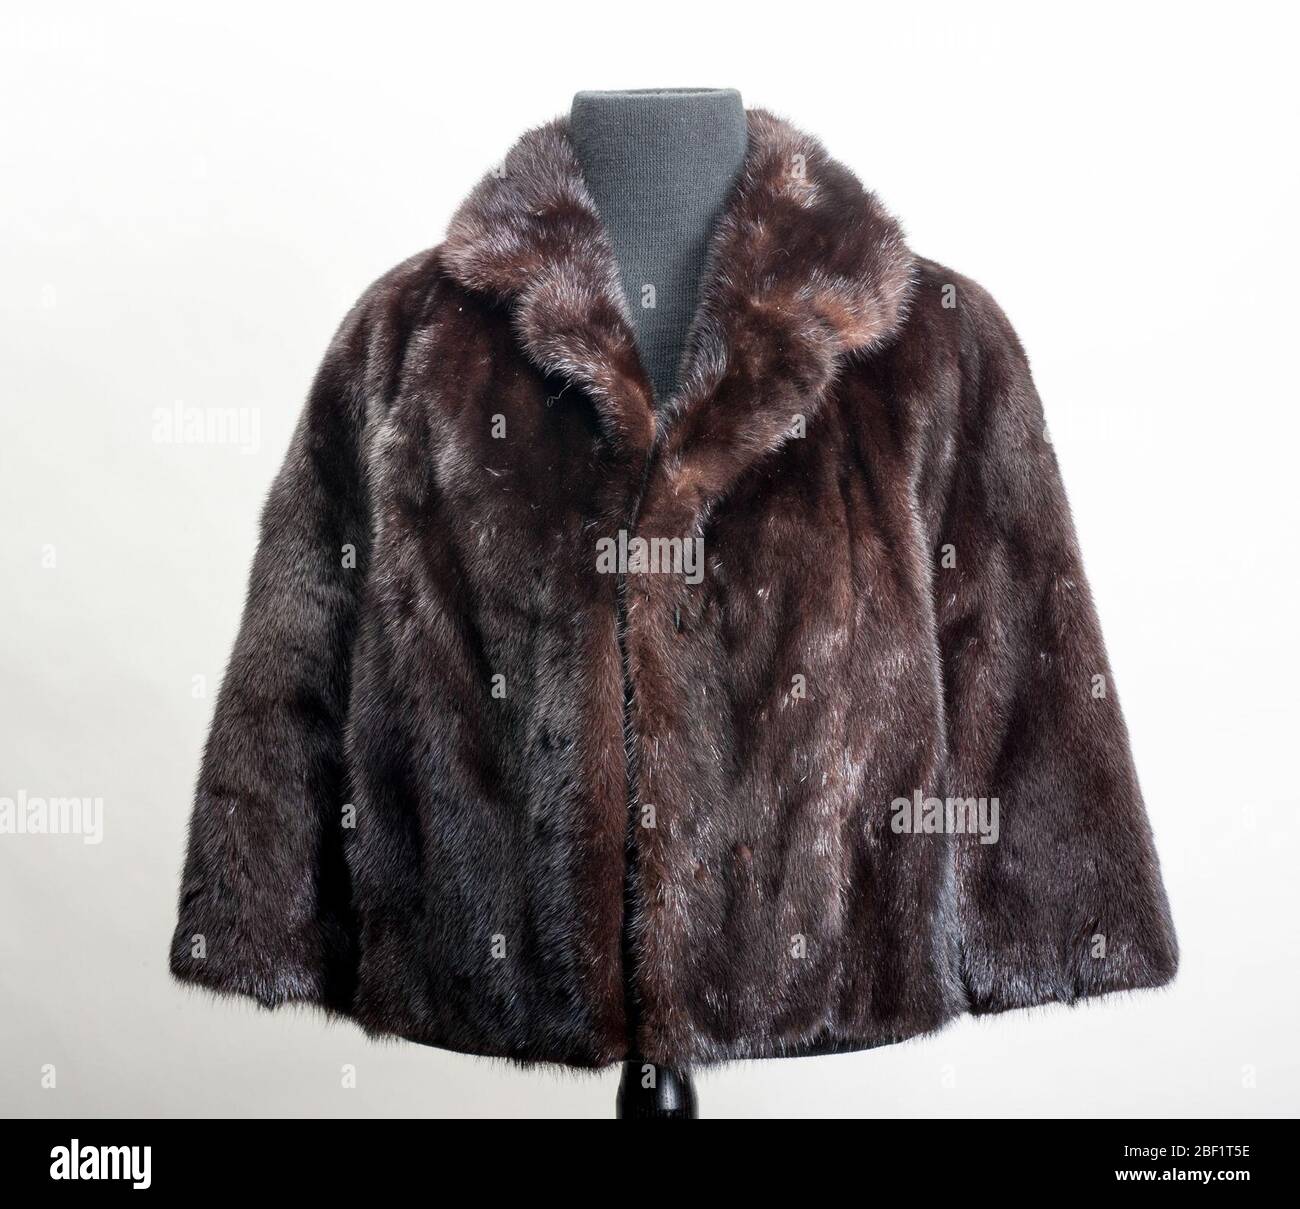 Sable Fur Jacket. Stock Photo